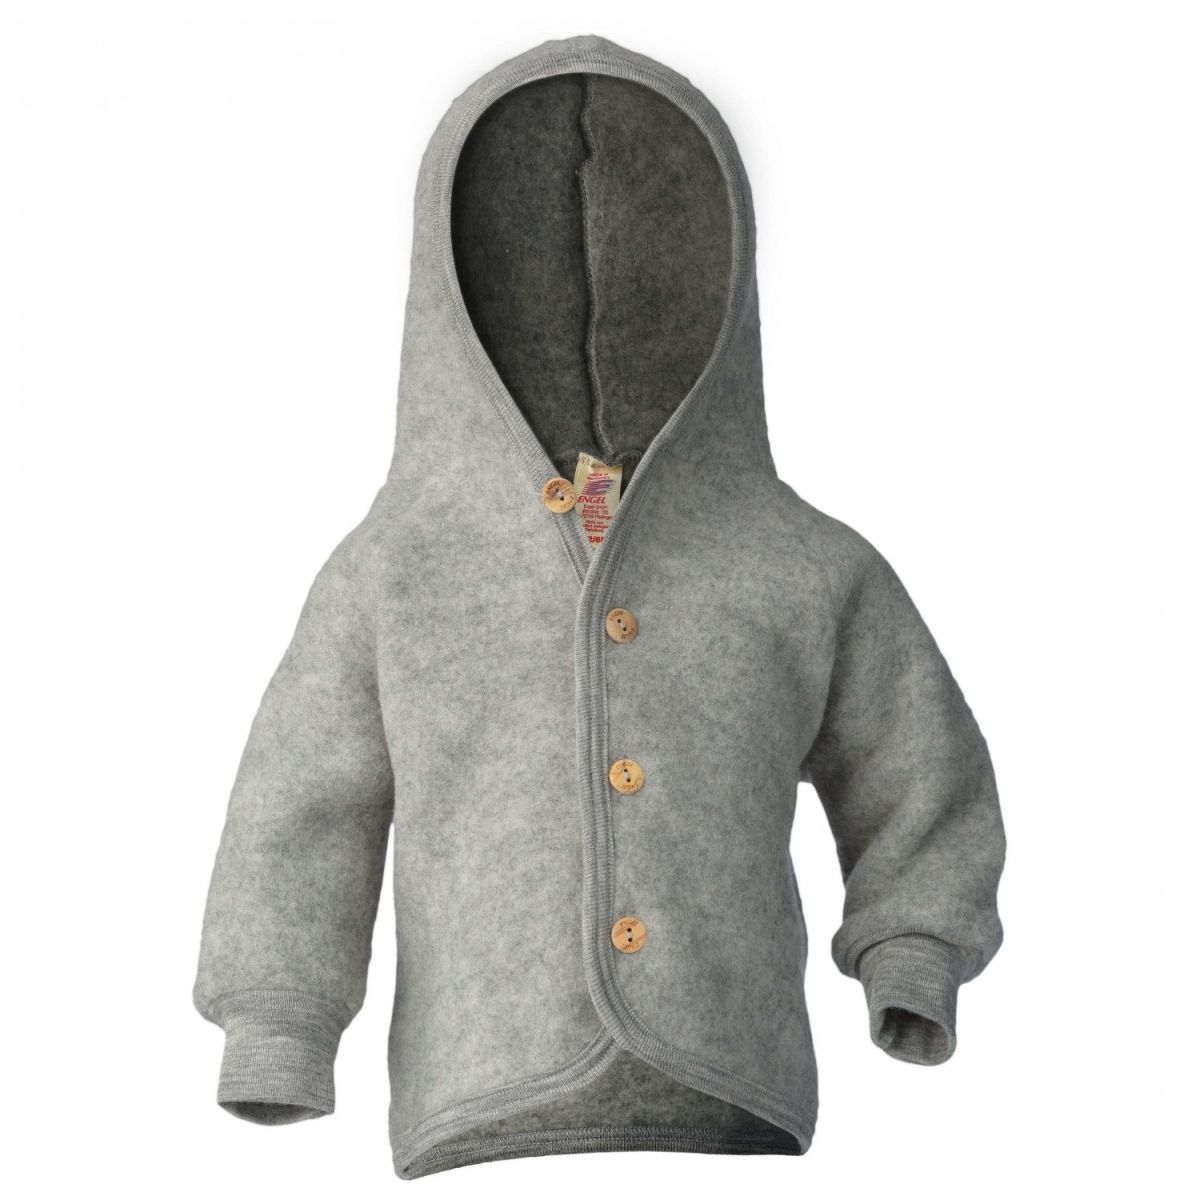 ENGEL Natur Hooded jacket with wooden buttons light Grey melange 575520-091 